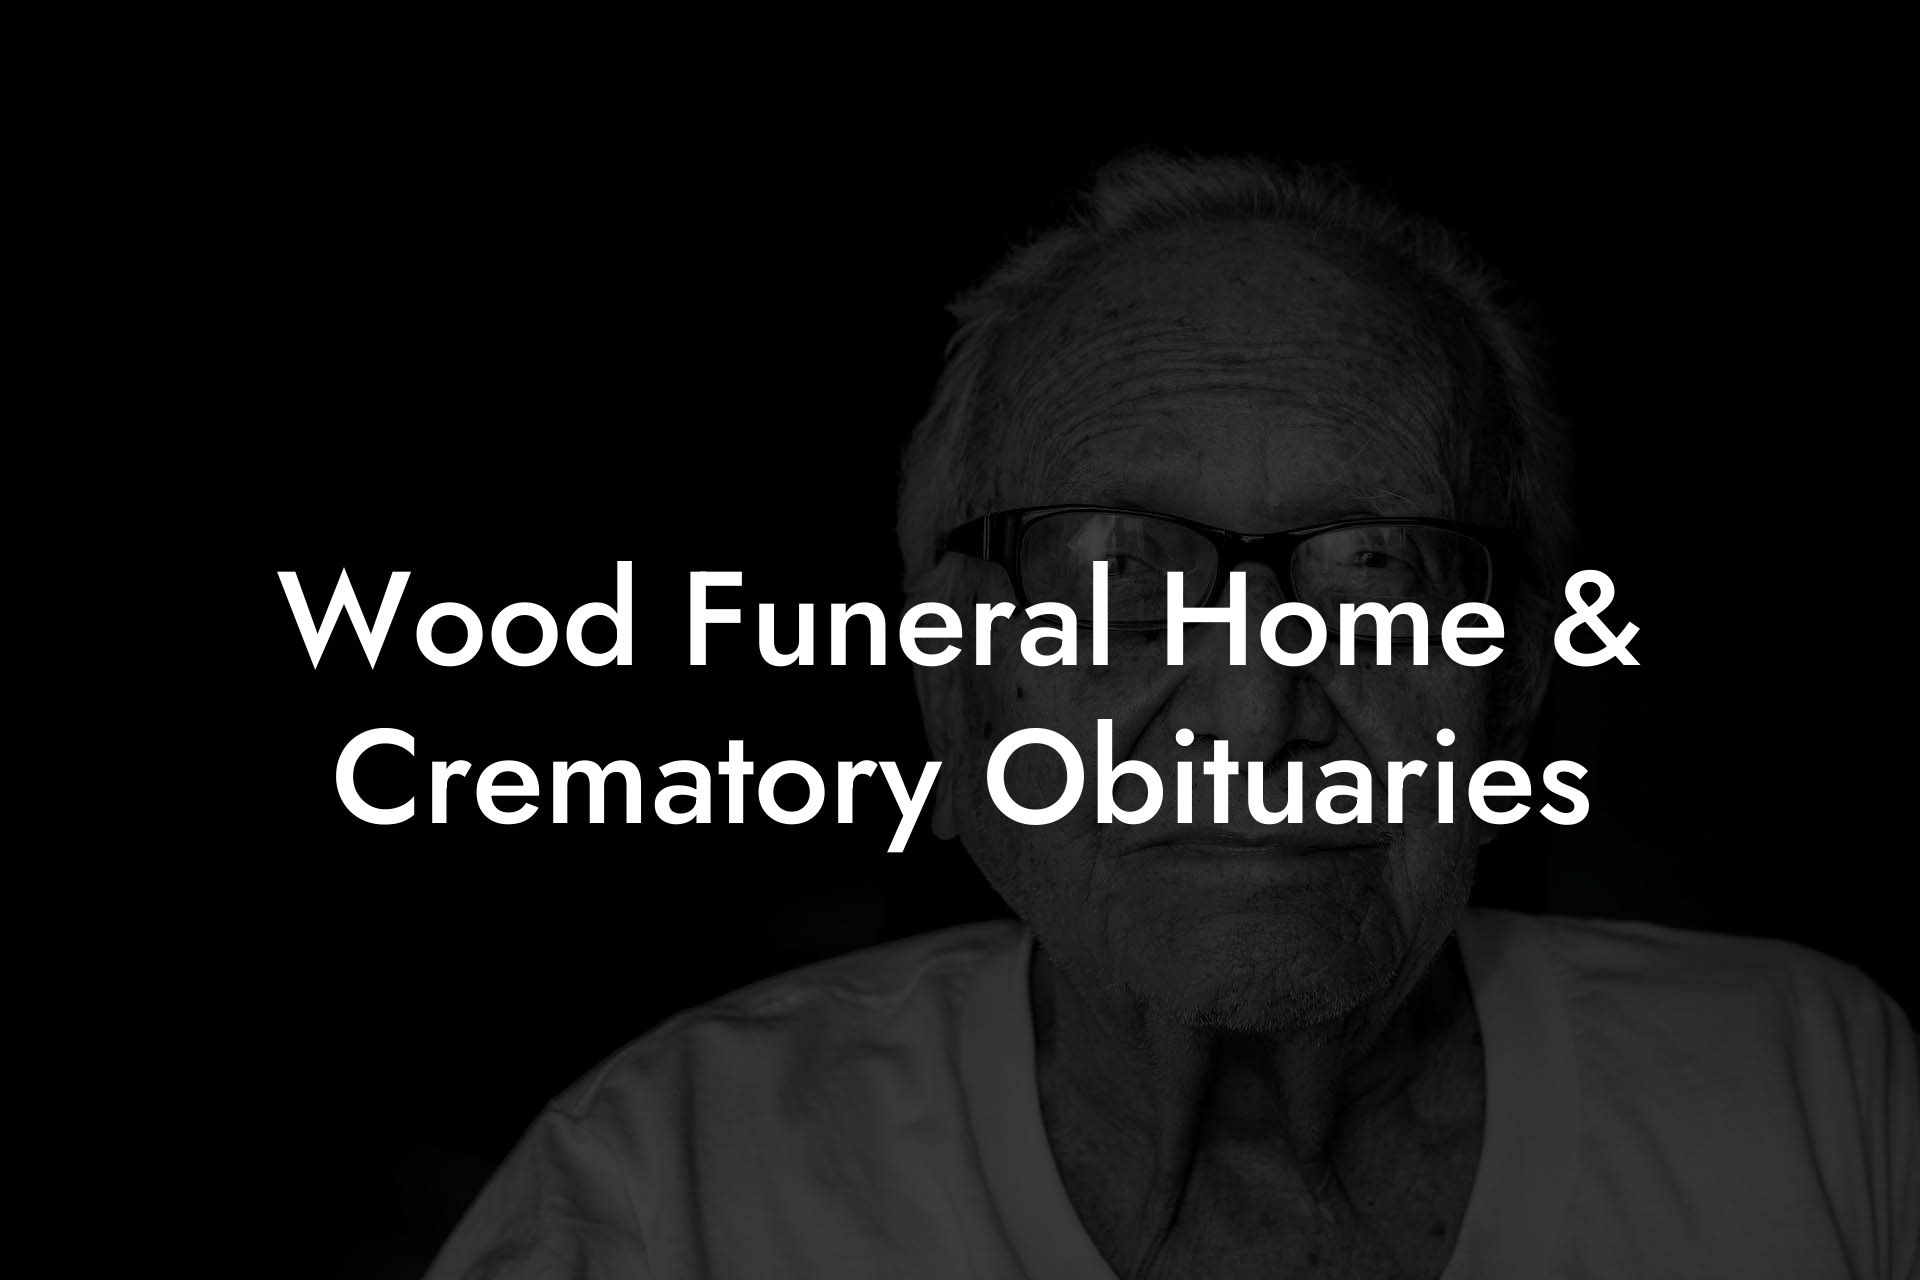 Wood Funeral Home & Crematory Obituaries